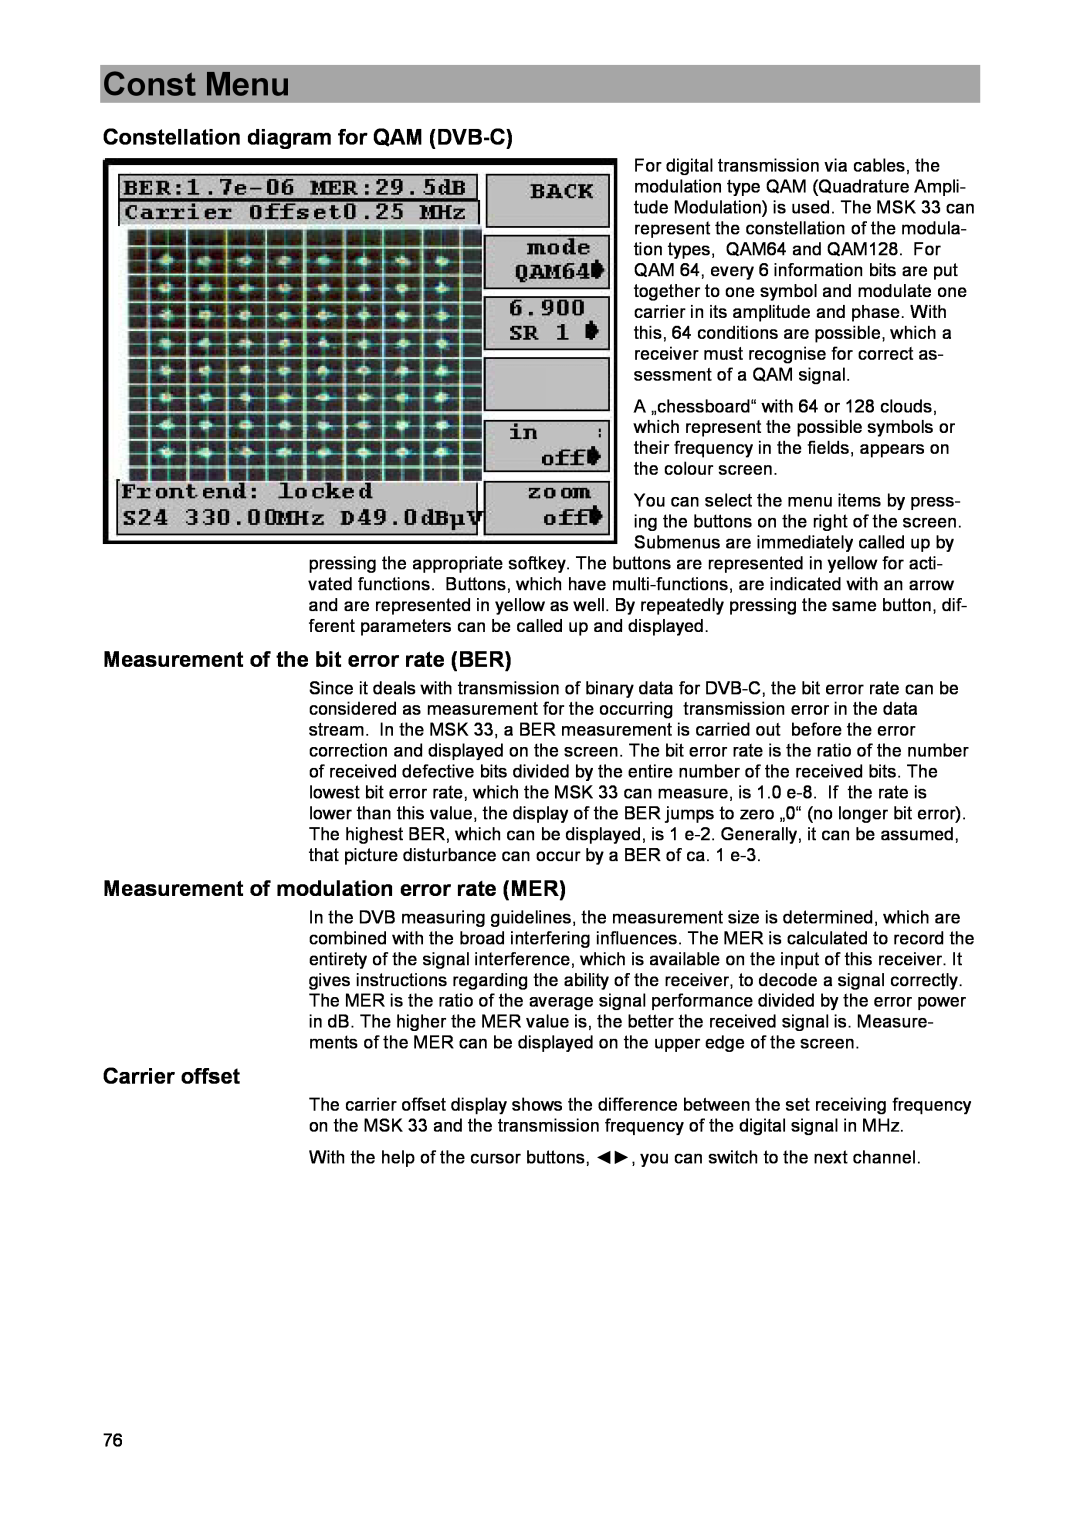 DreamGEAR MSK 33 Constellation diagram for QAM DVB-C, Measurement of modulation error rate MER, Const Menu, Carrier offset 